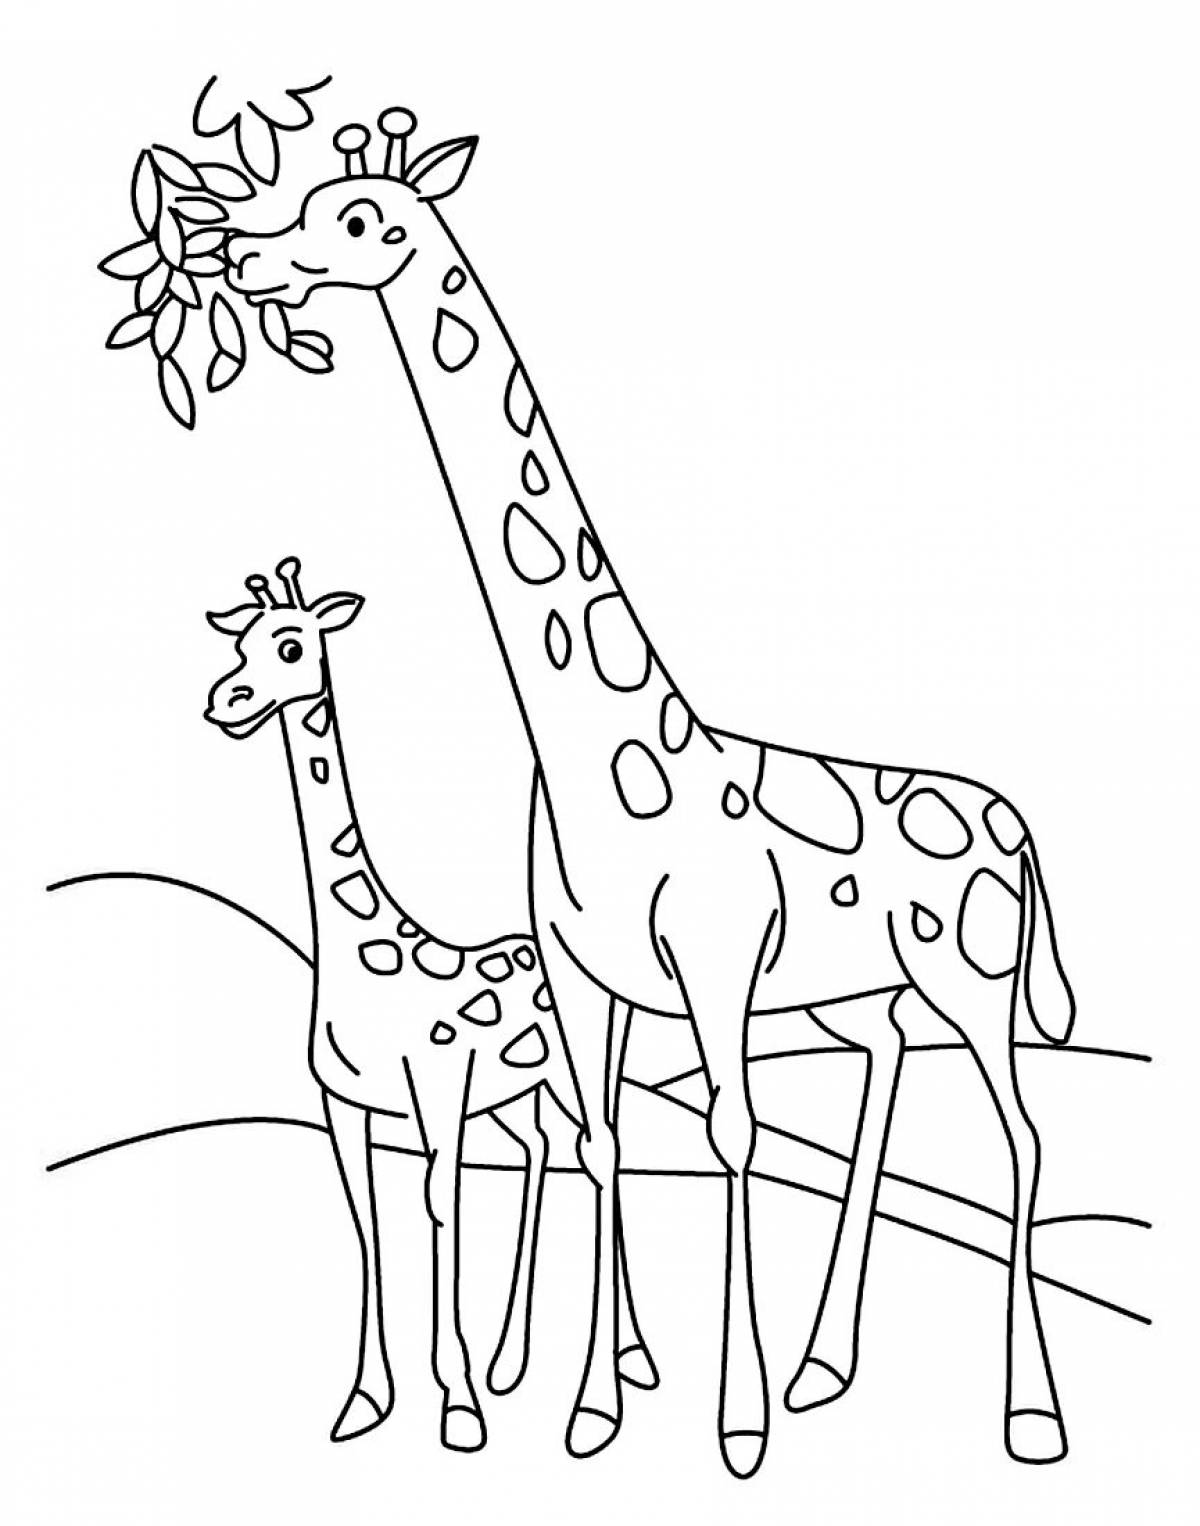 Relaxing giraffe coloring book for kids